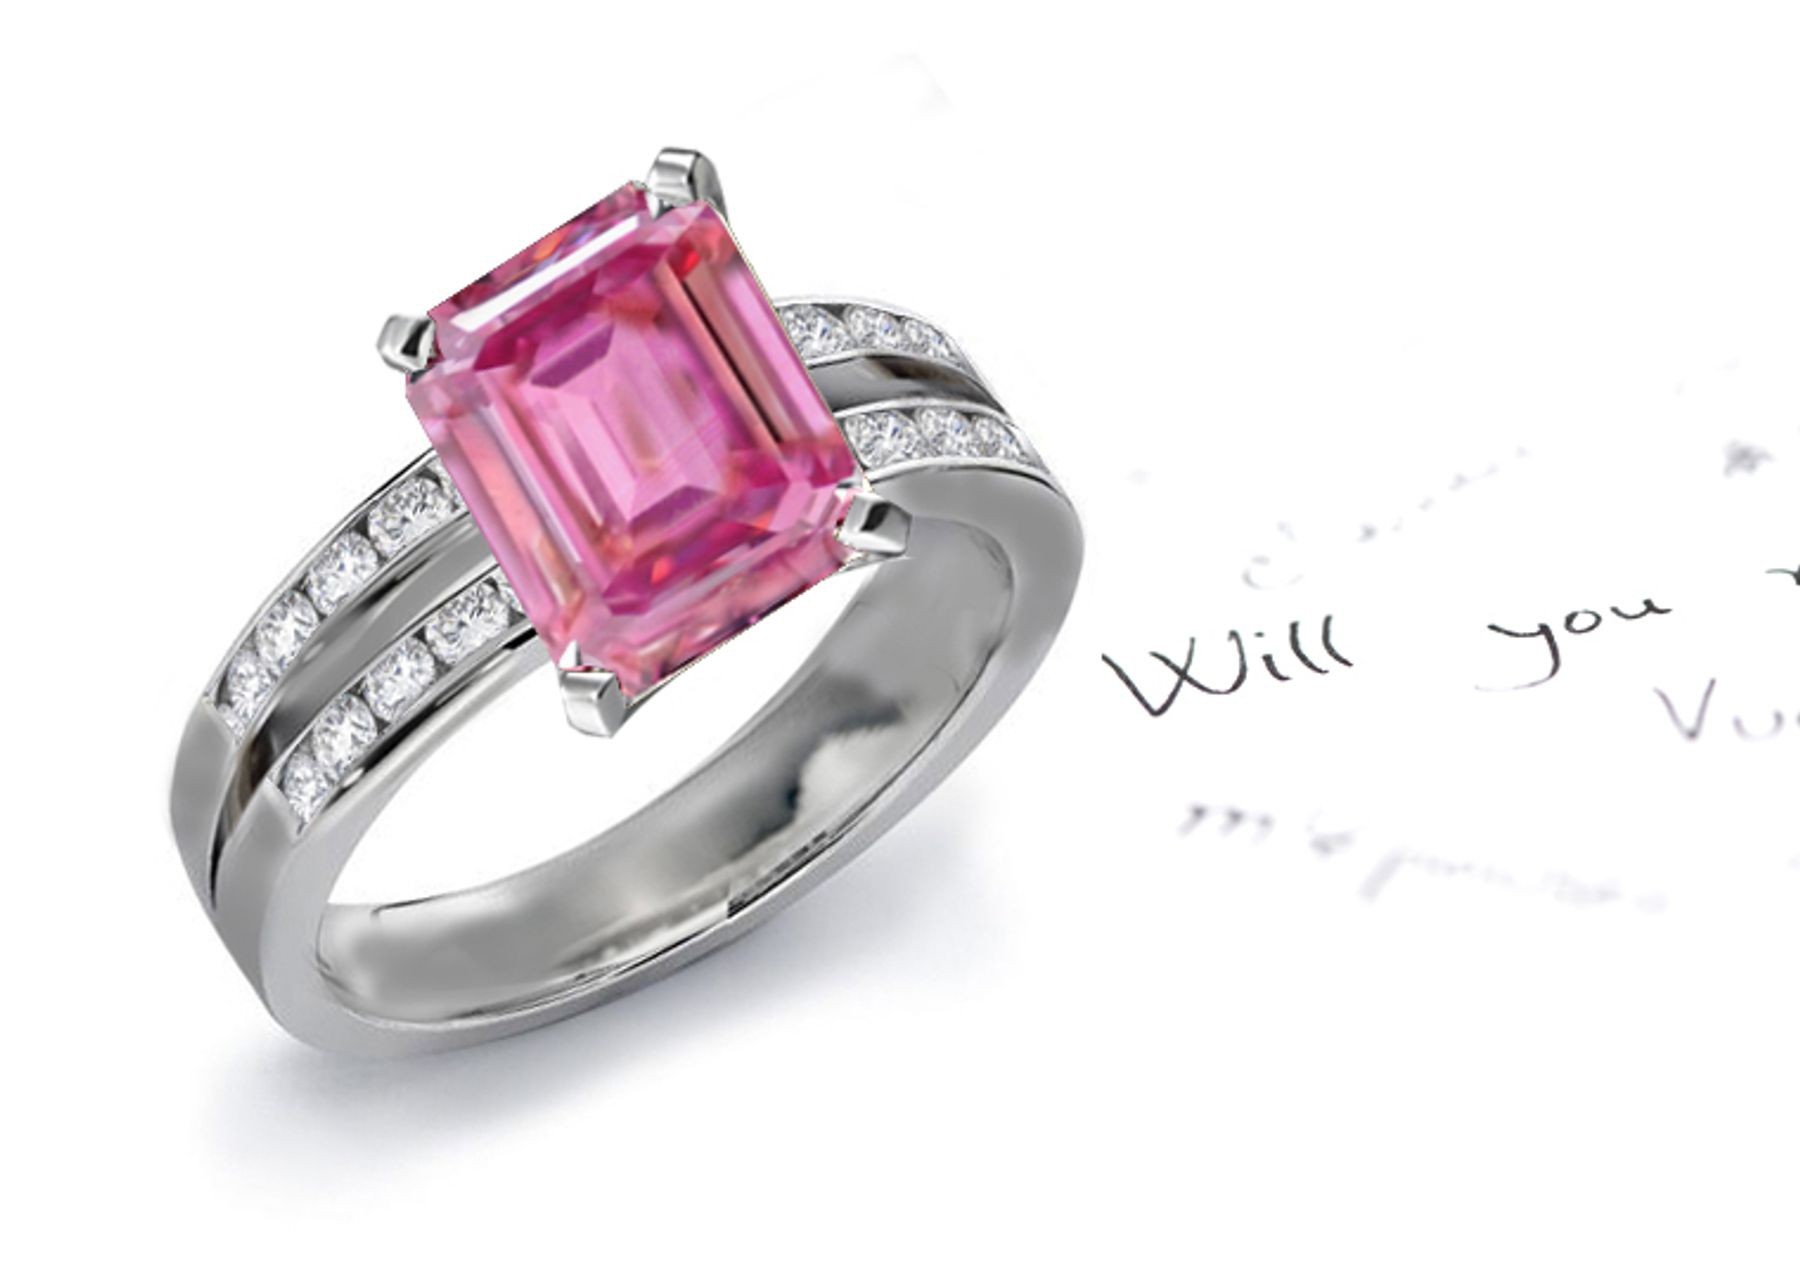 An Exquisite American Designer Pink Sapphire & Diamond Engagement Ring